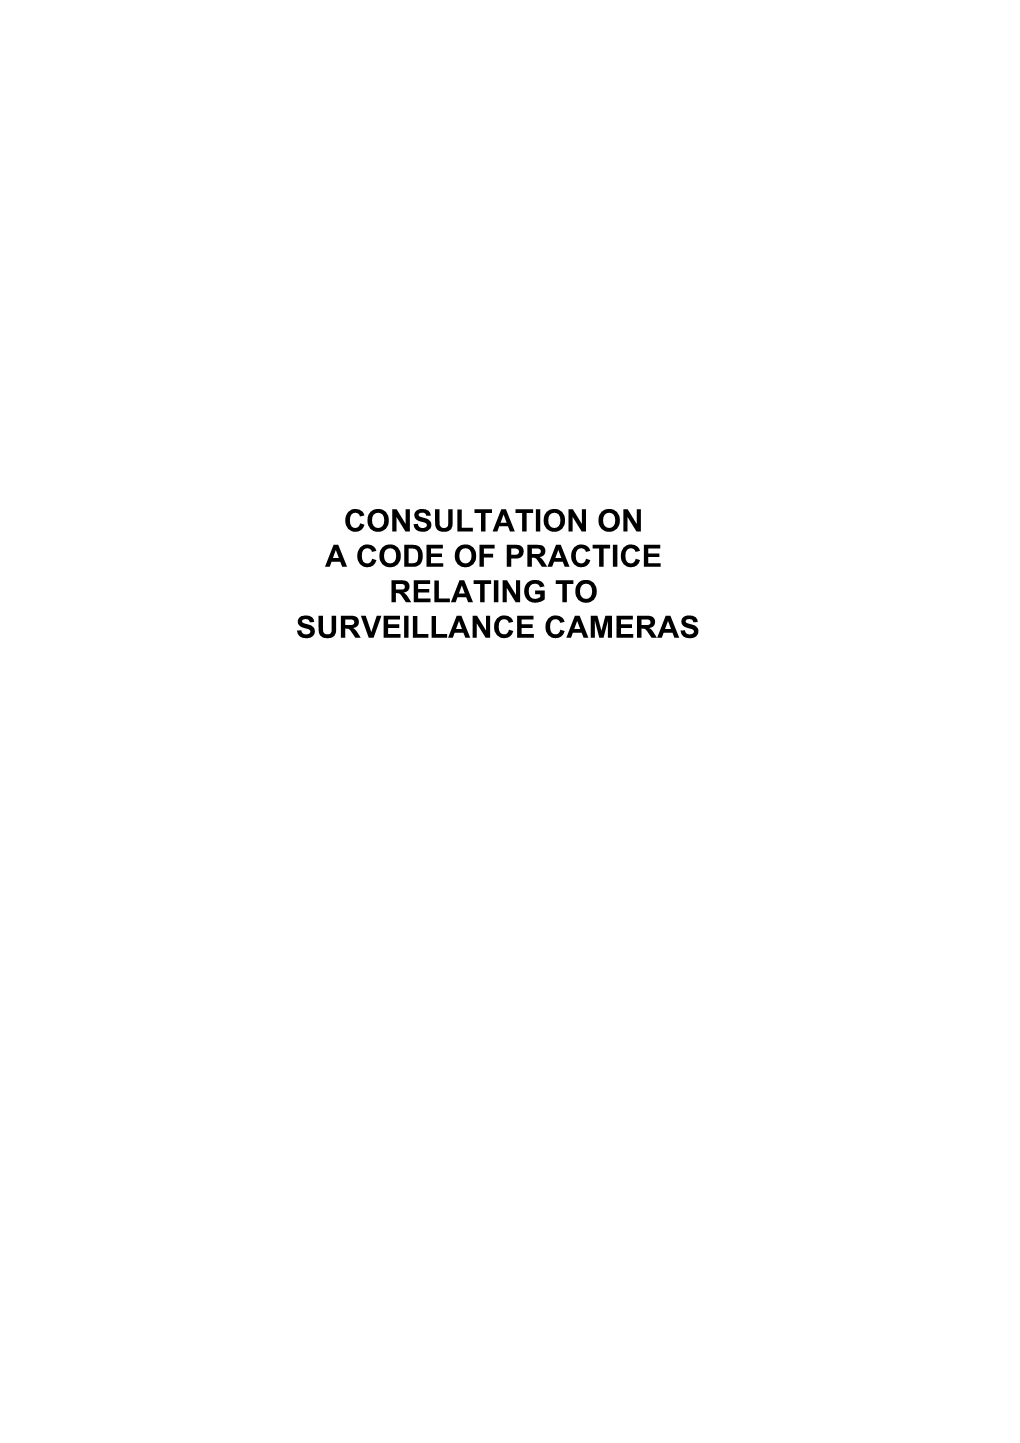 A Code of Practice